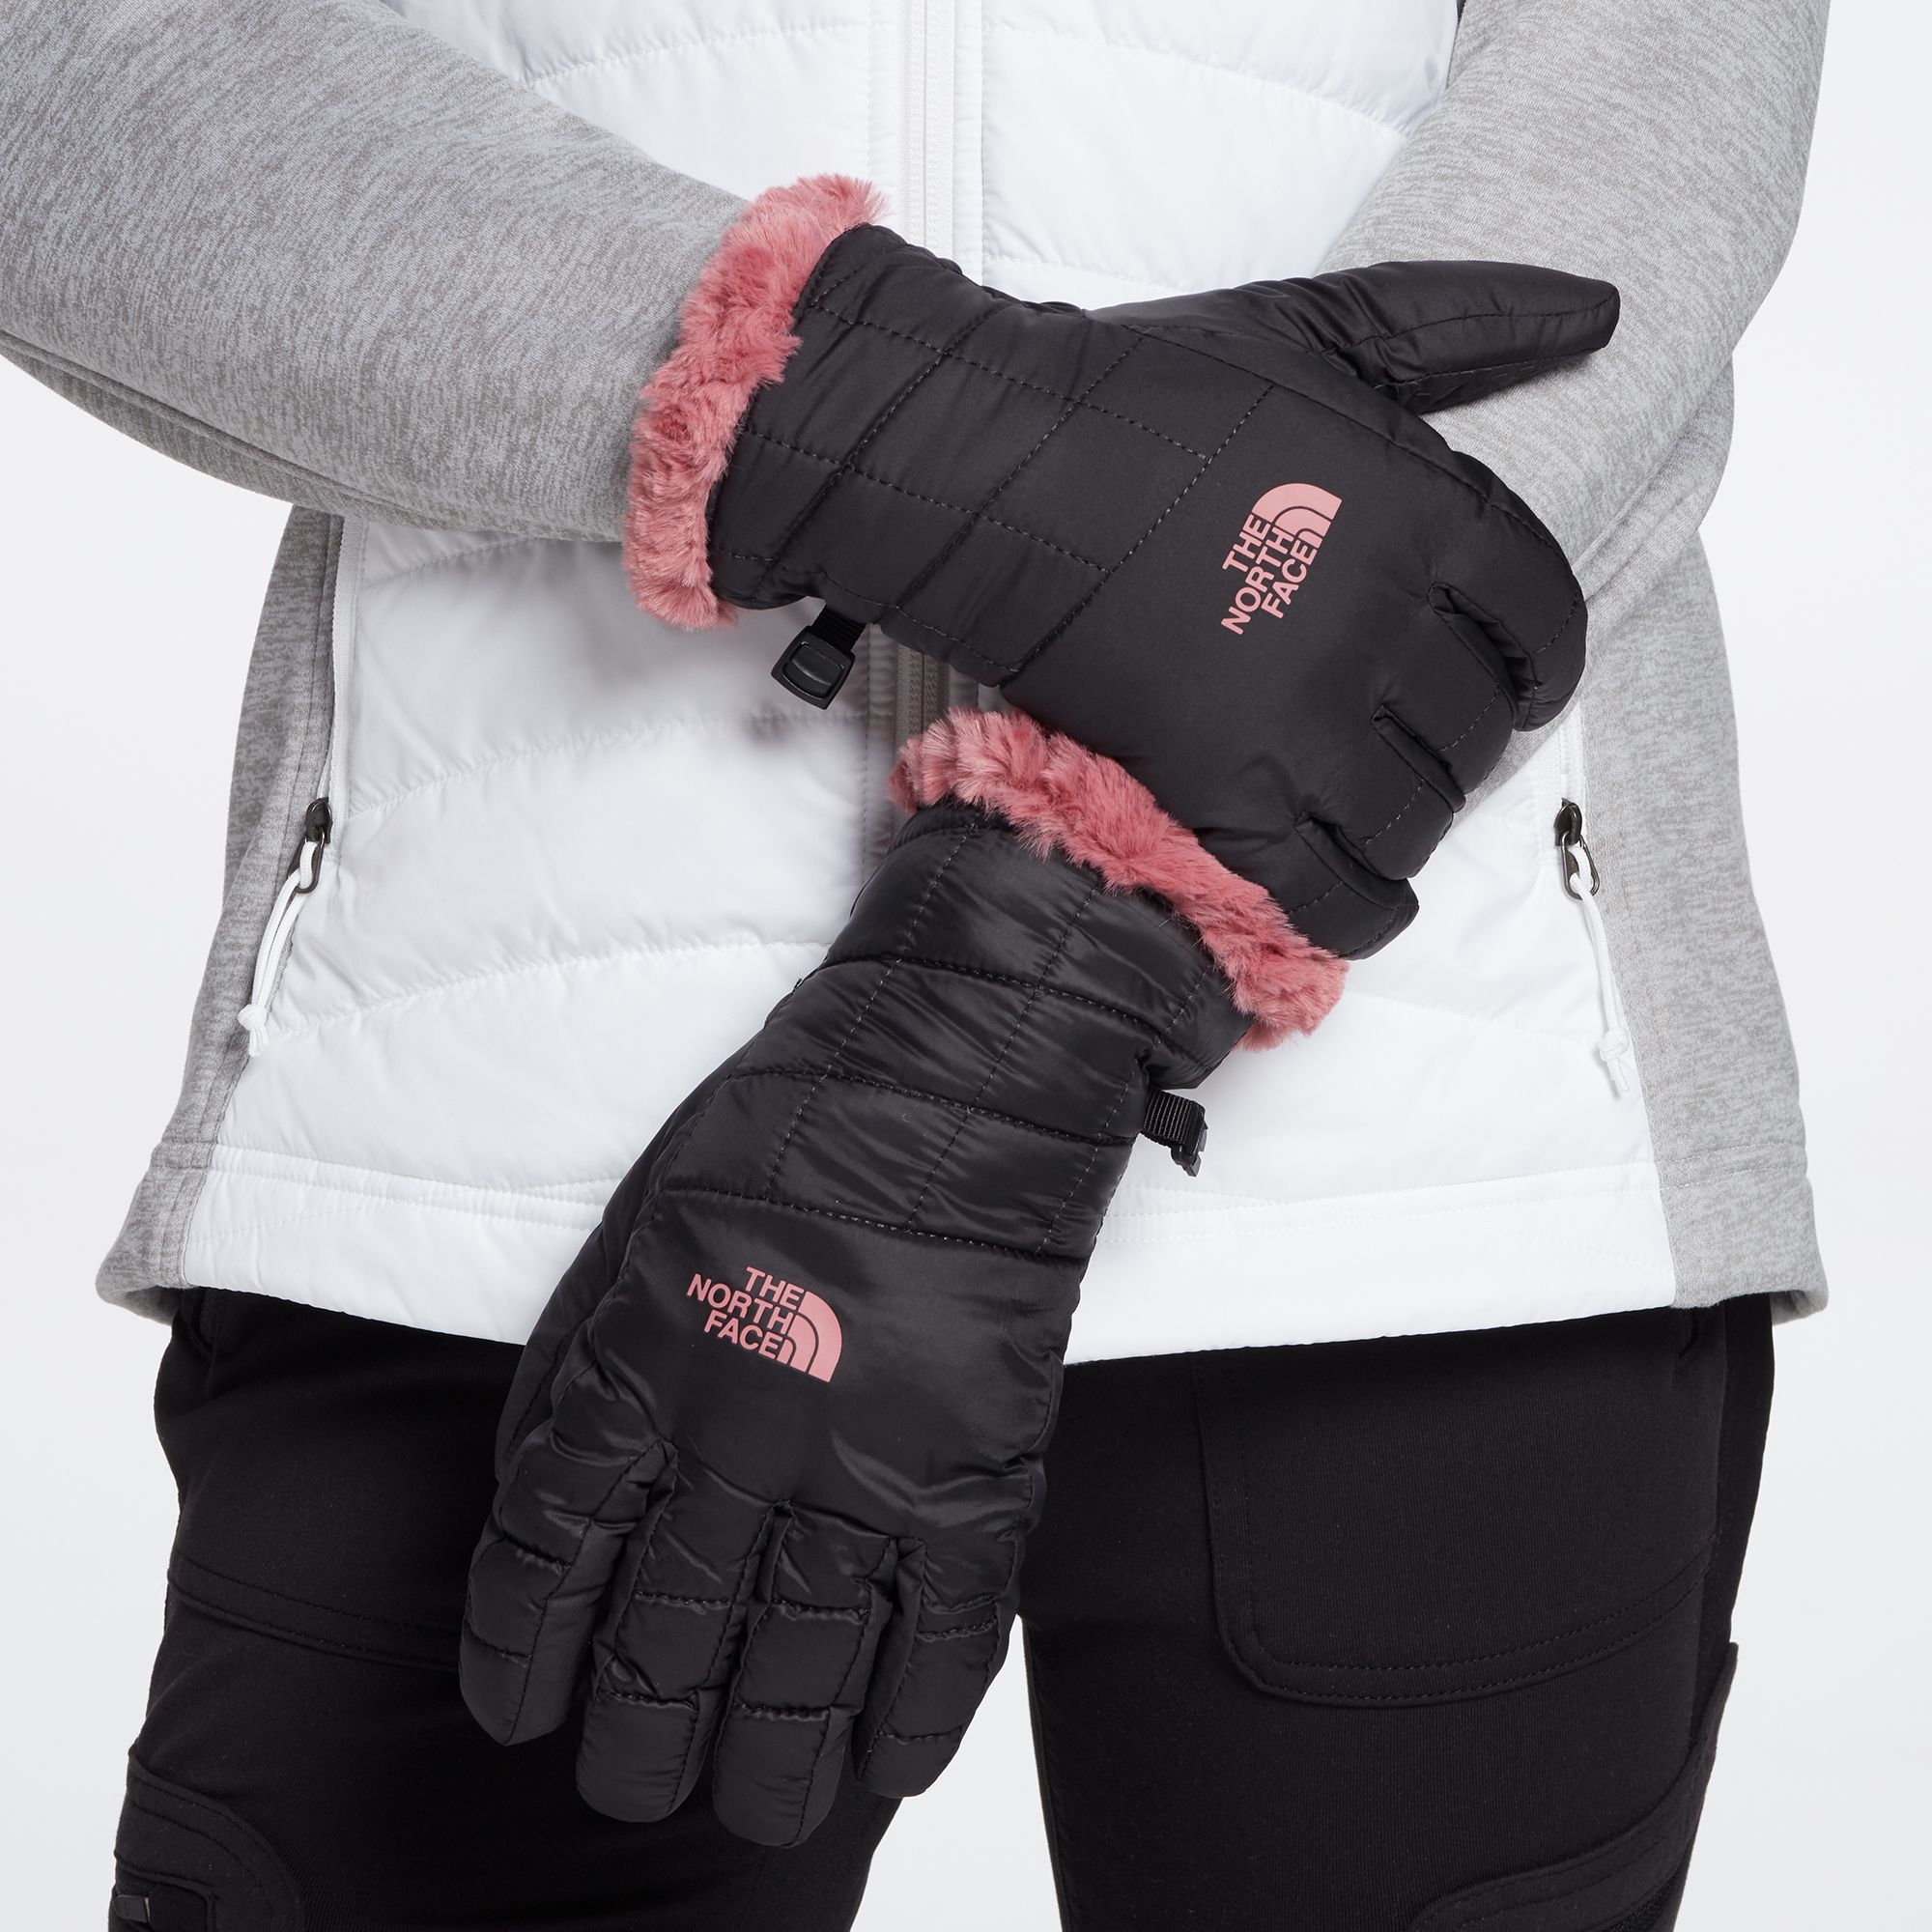 north face ladies gloves